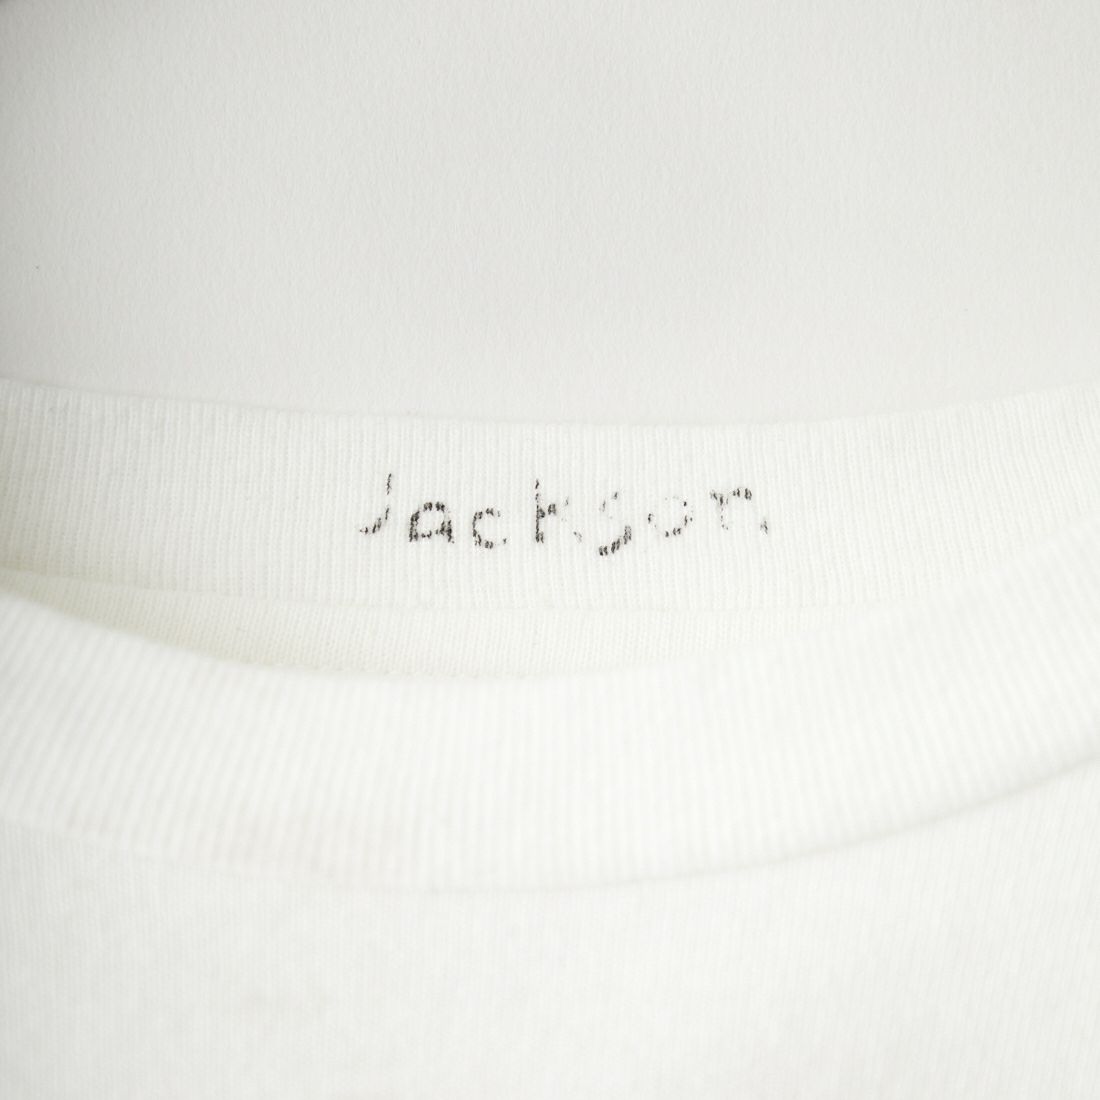 JACKSON MATISSE × JEANS FACTORY [ジャクソンマティス × ジーンズファクトリー] 別注 PROPERTY OF JACKSON NETS Tシャツ [JM22SSJF01-JF] WHITE